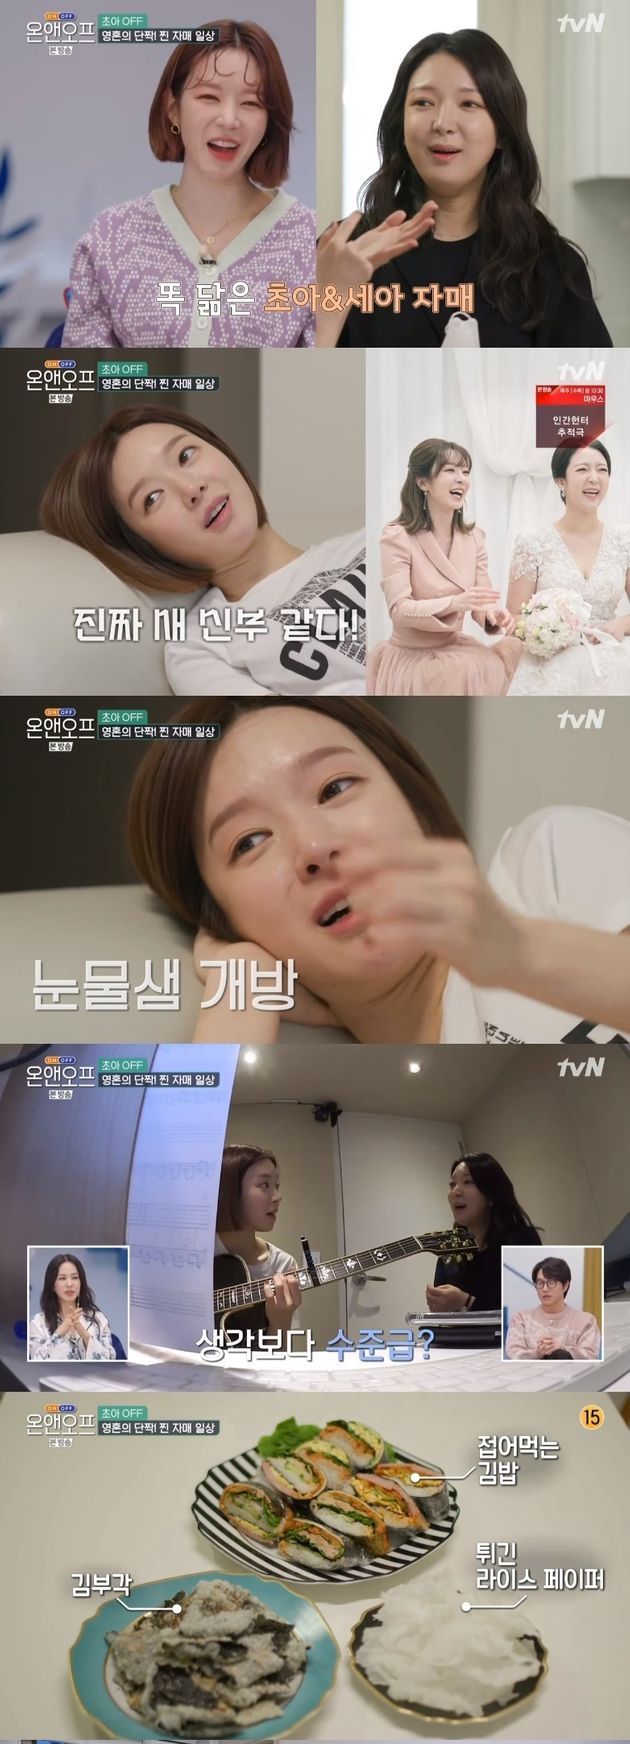 tvN '온앤오프' 화면 캡처